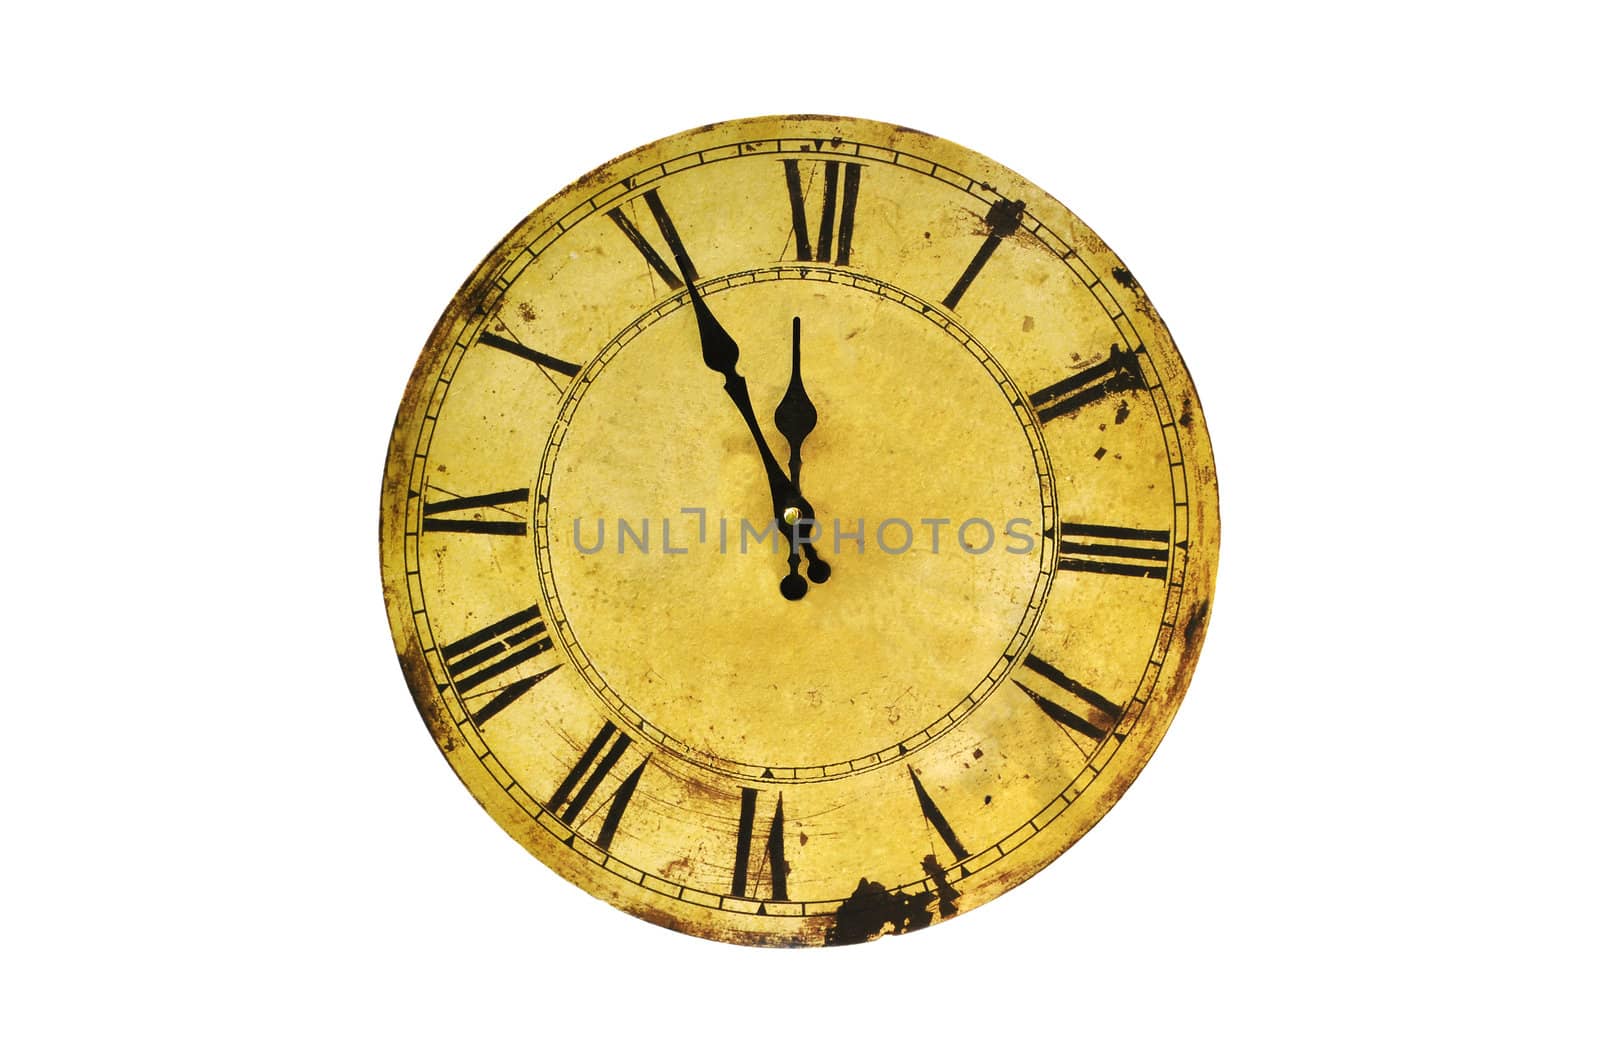 Five minutes to twelve on isolated vintage clock.